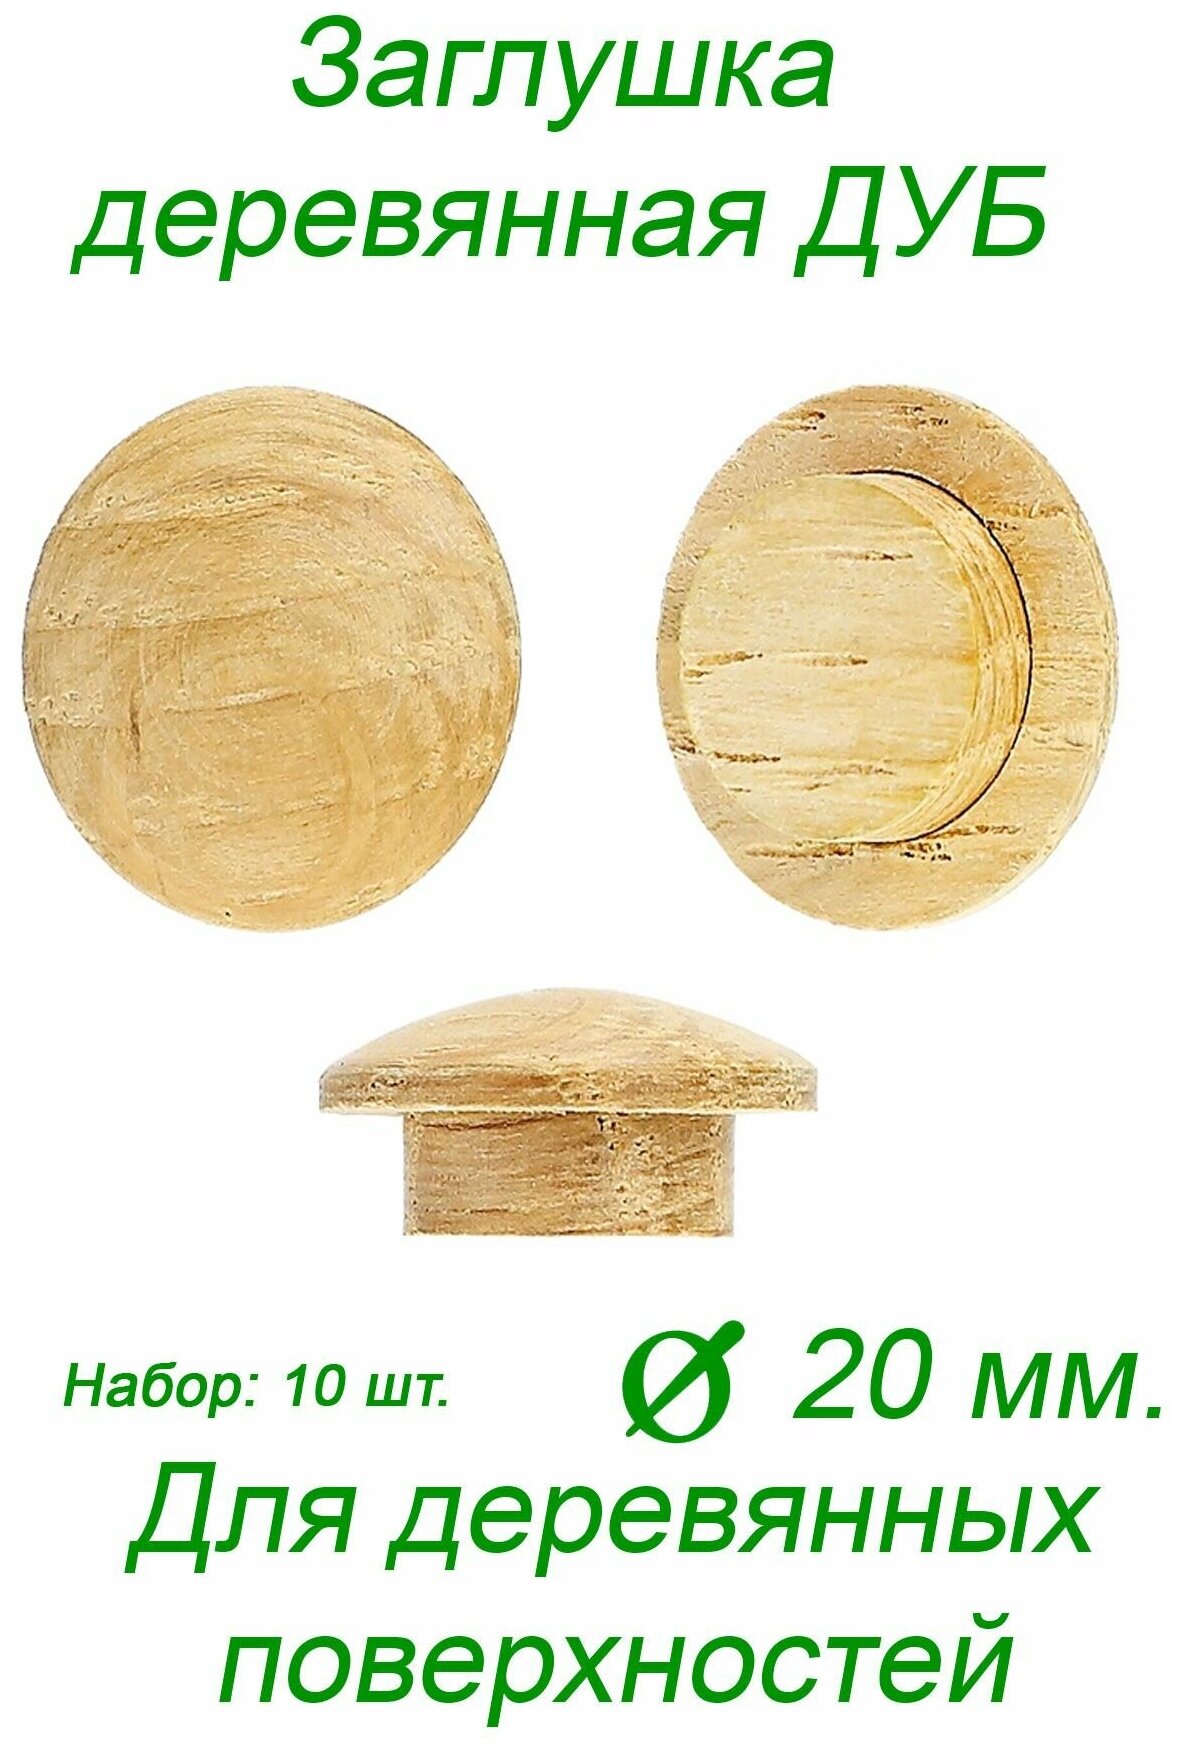 Заглушка деревянная для мебели ДУБ диаметр 20мм.